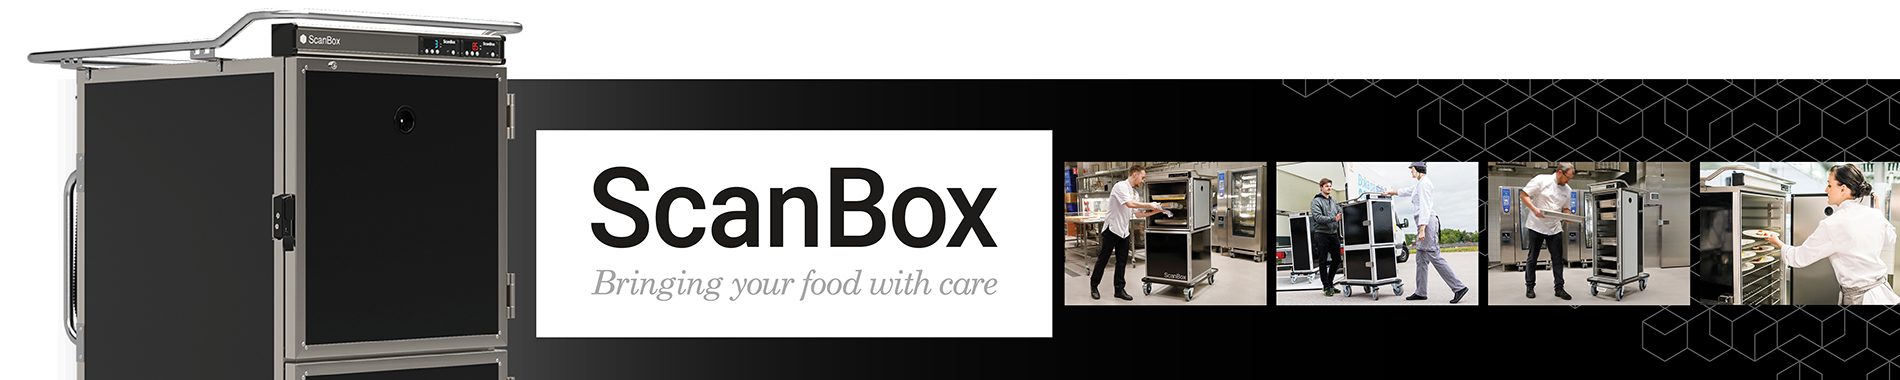 ScanBox Food Transport Carts Main Branding Header